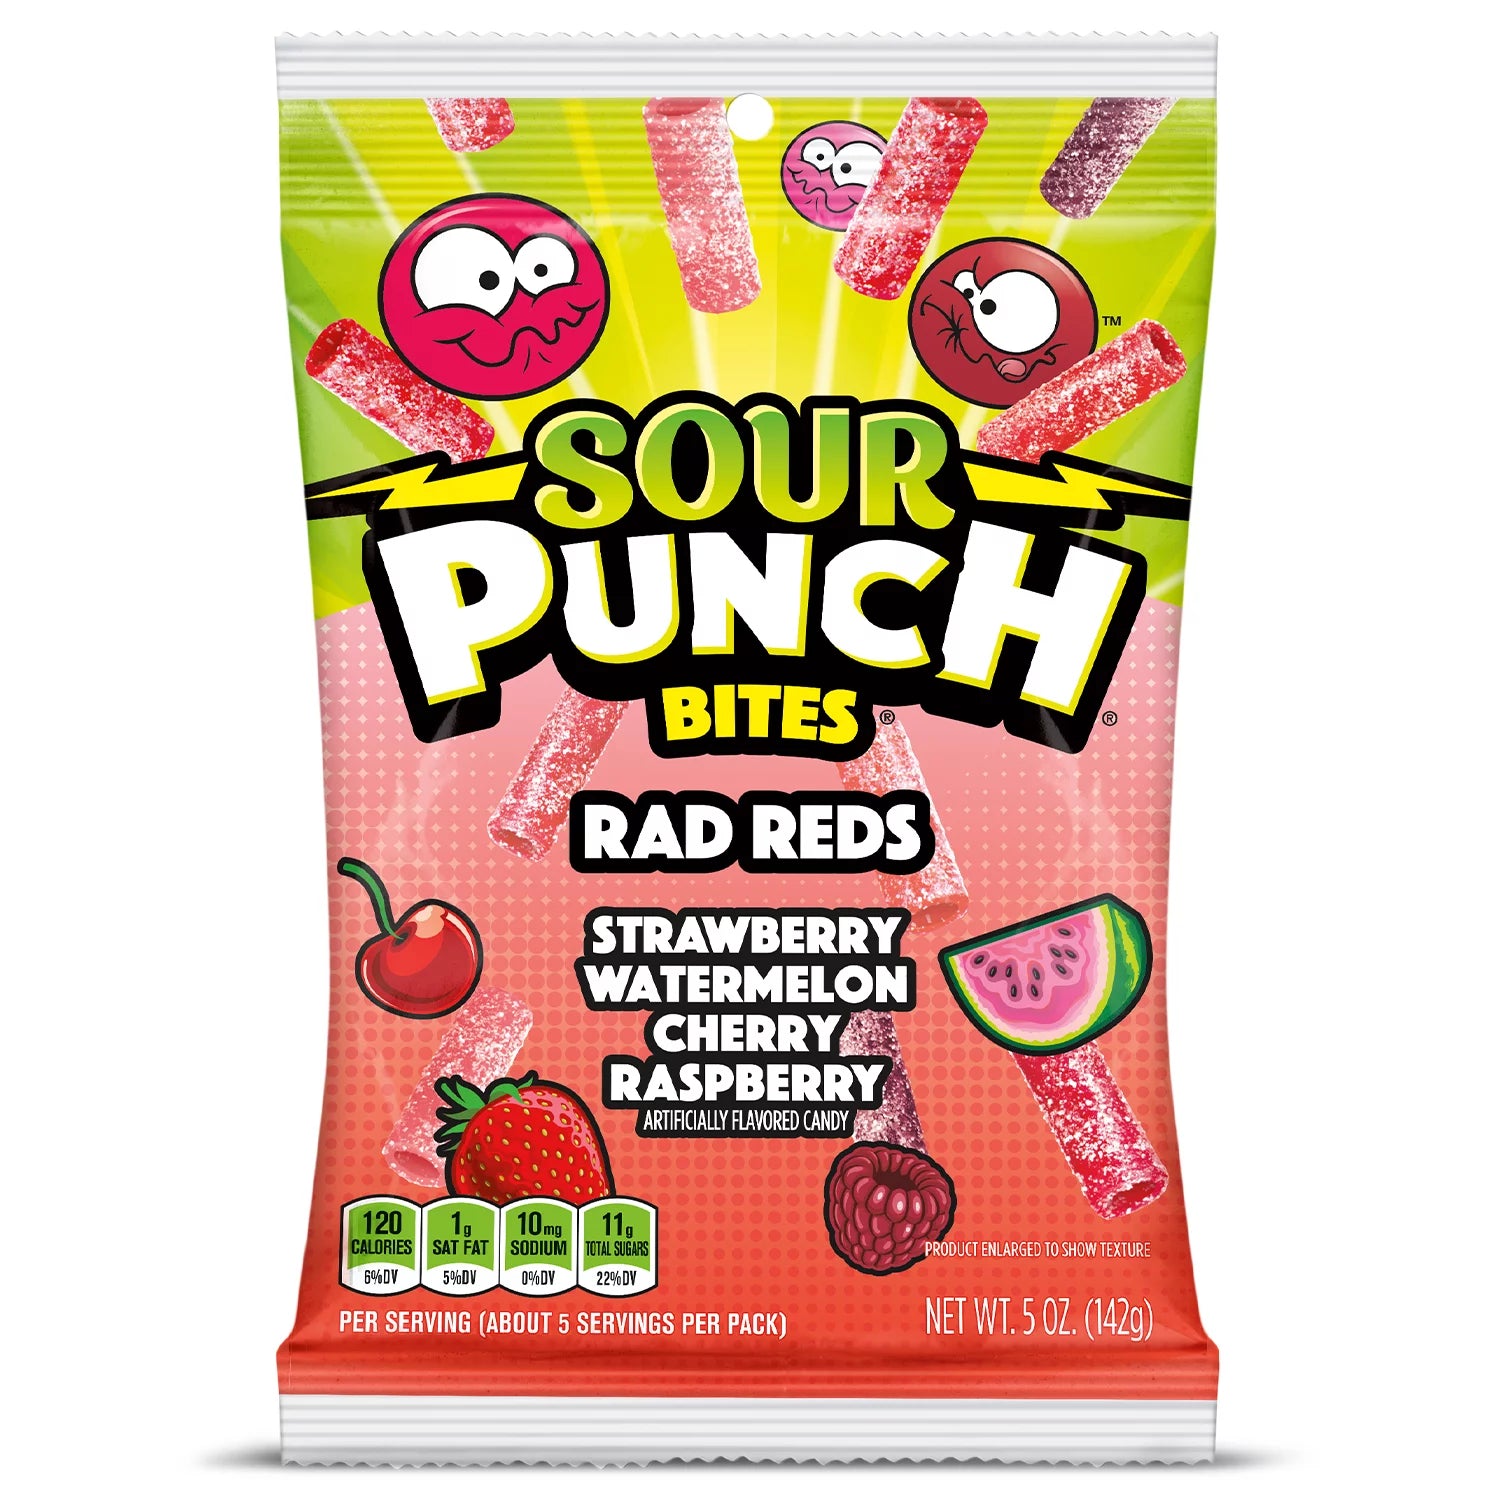 Sour Punch Bites Rad Reds - 142g